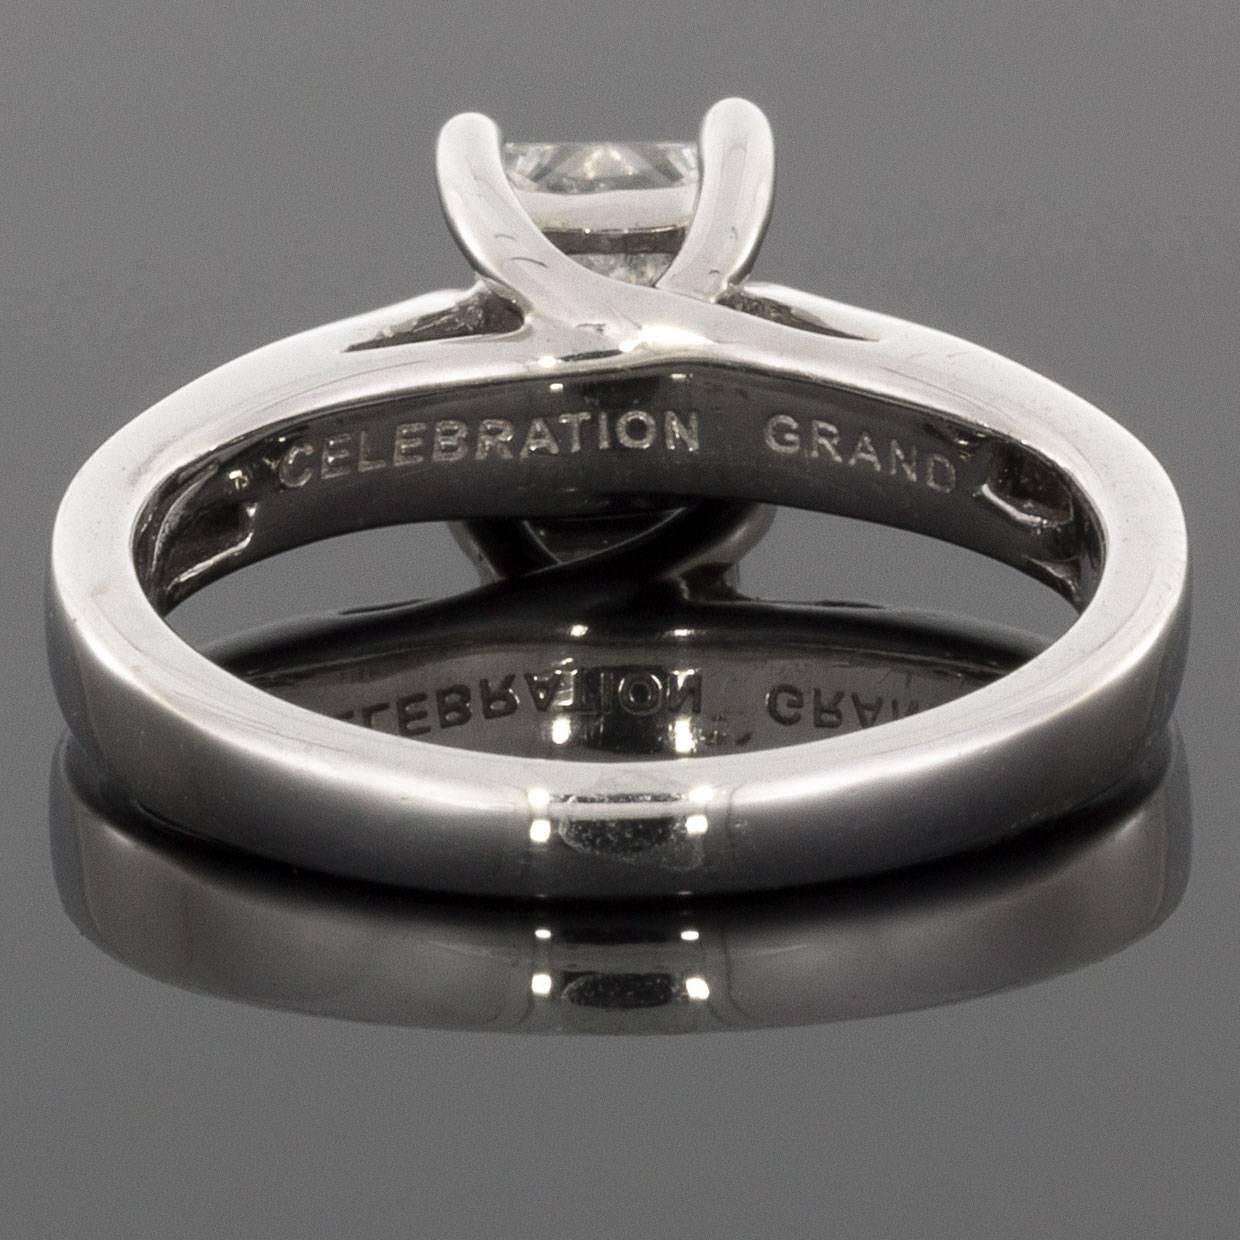 celebration grand engagement ring